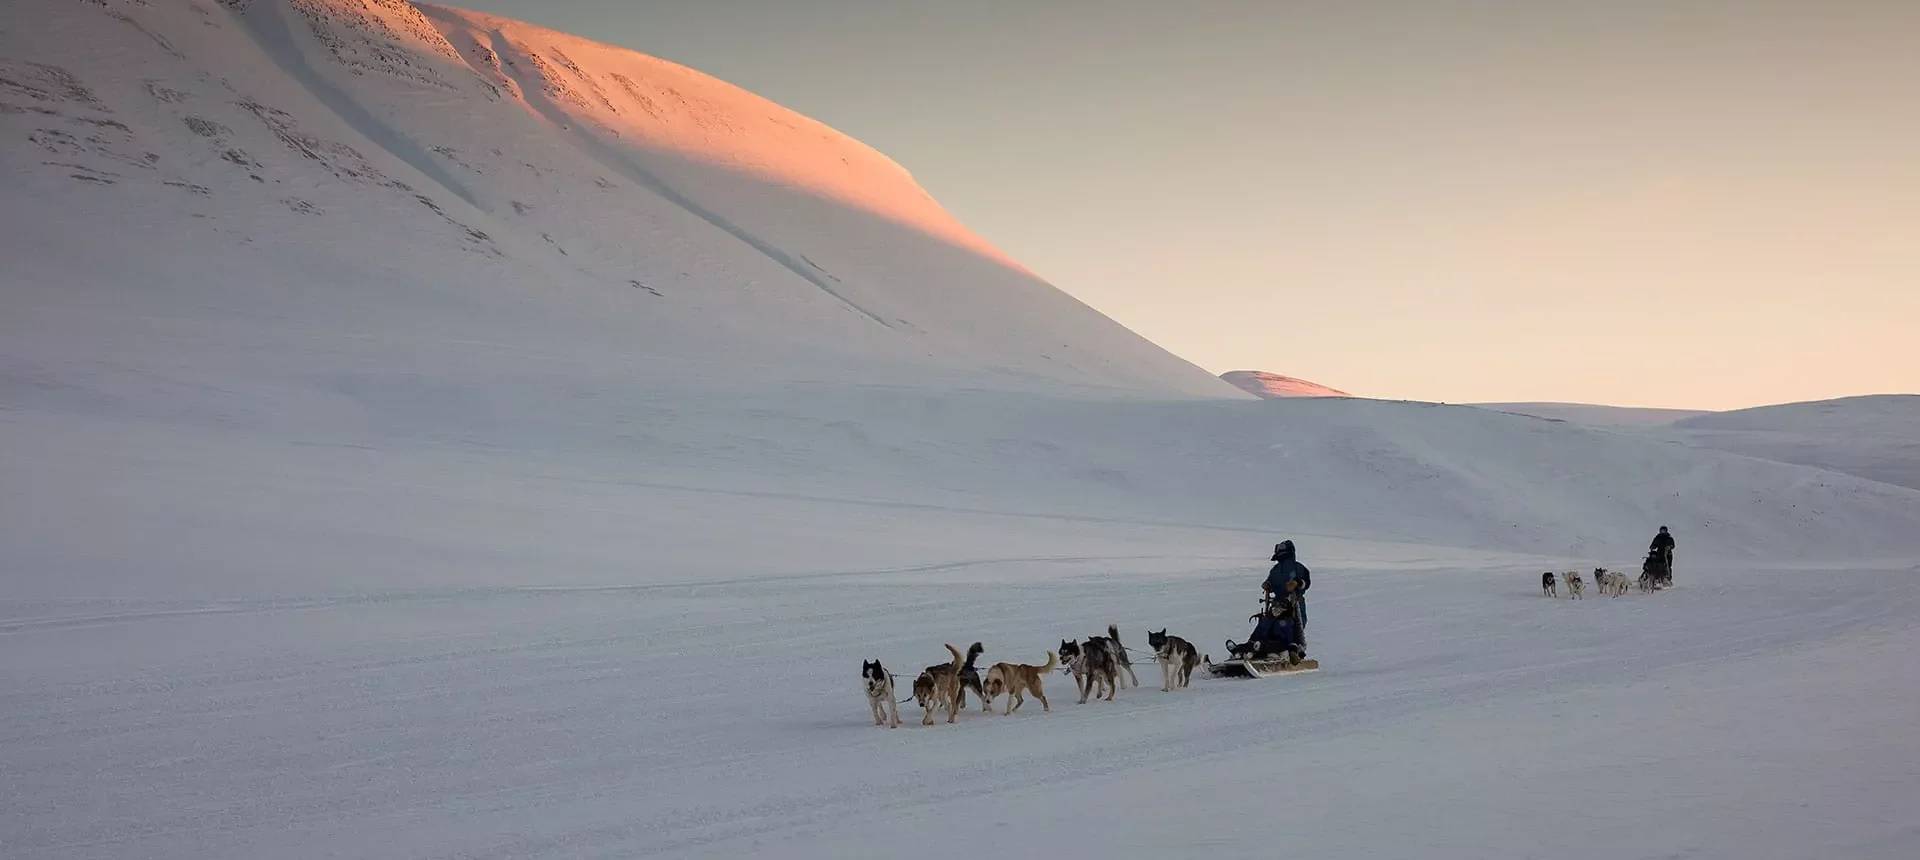 dogsledding trip by Greendog Svalbard